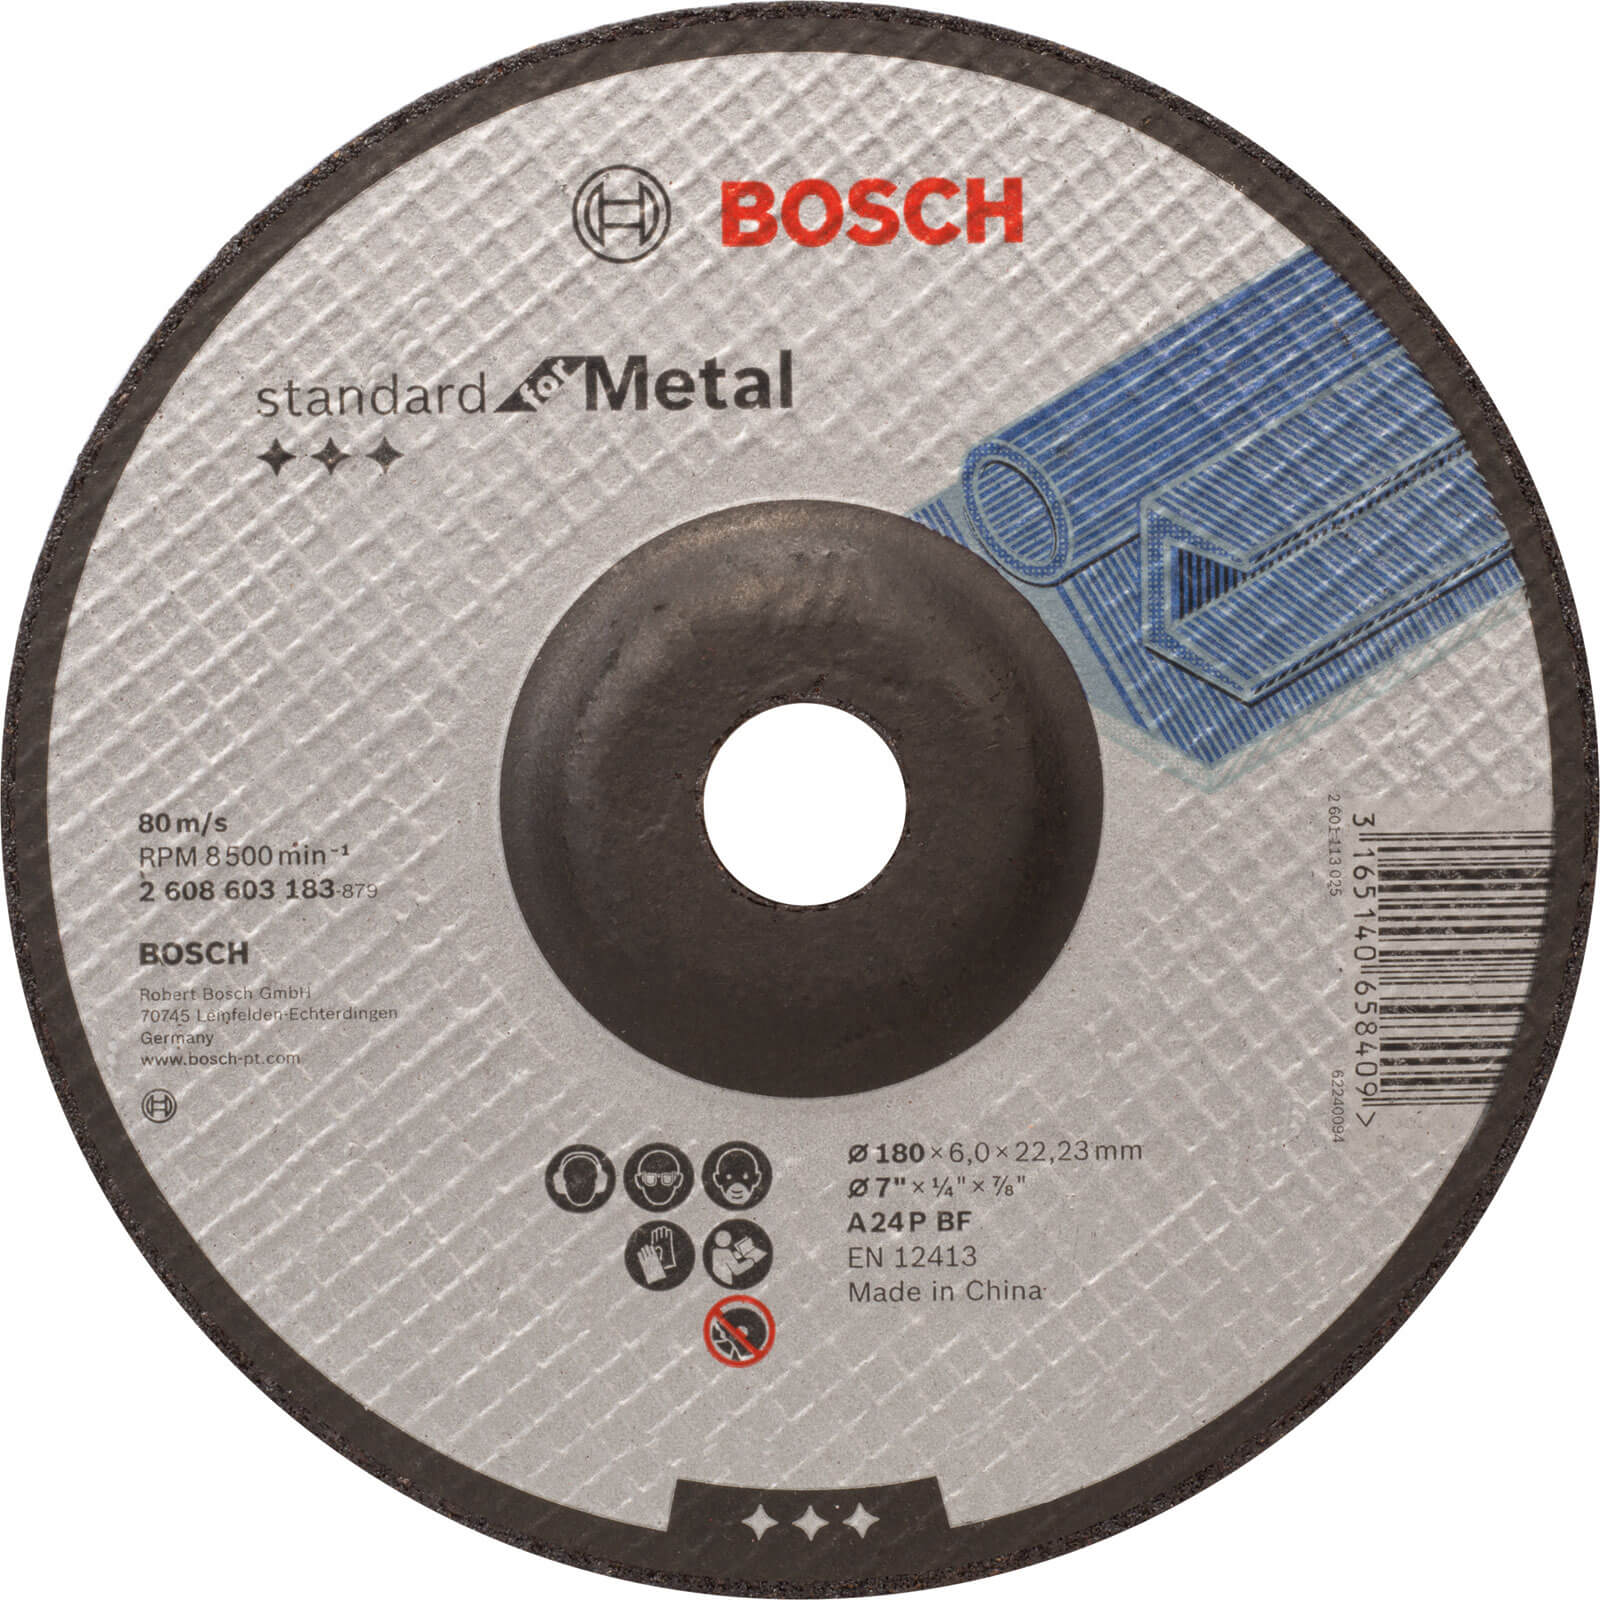 Photo of Bosch Standard Depressed Centre Metal Grinding Disc 180mm 6mm 22mm